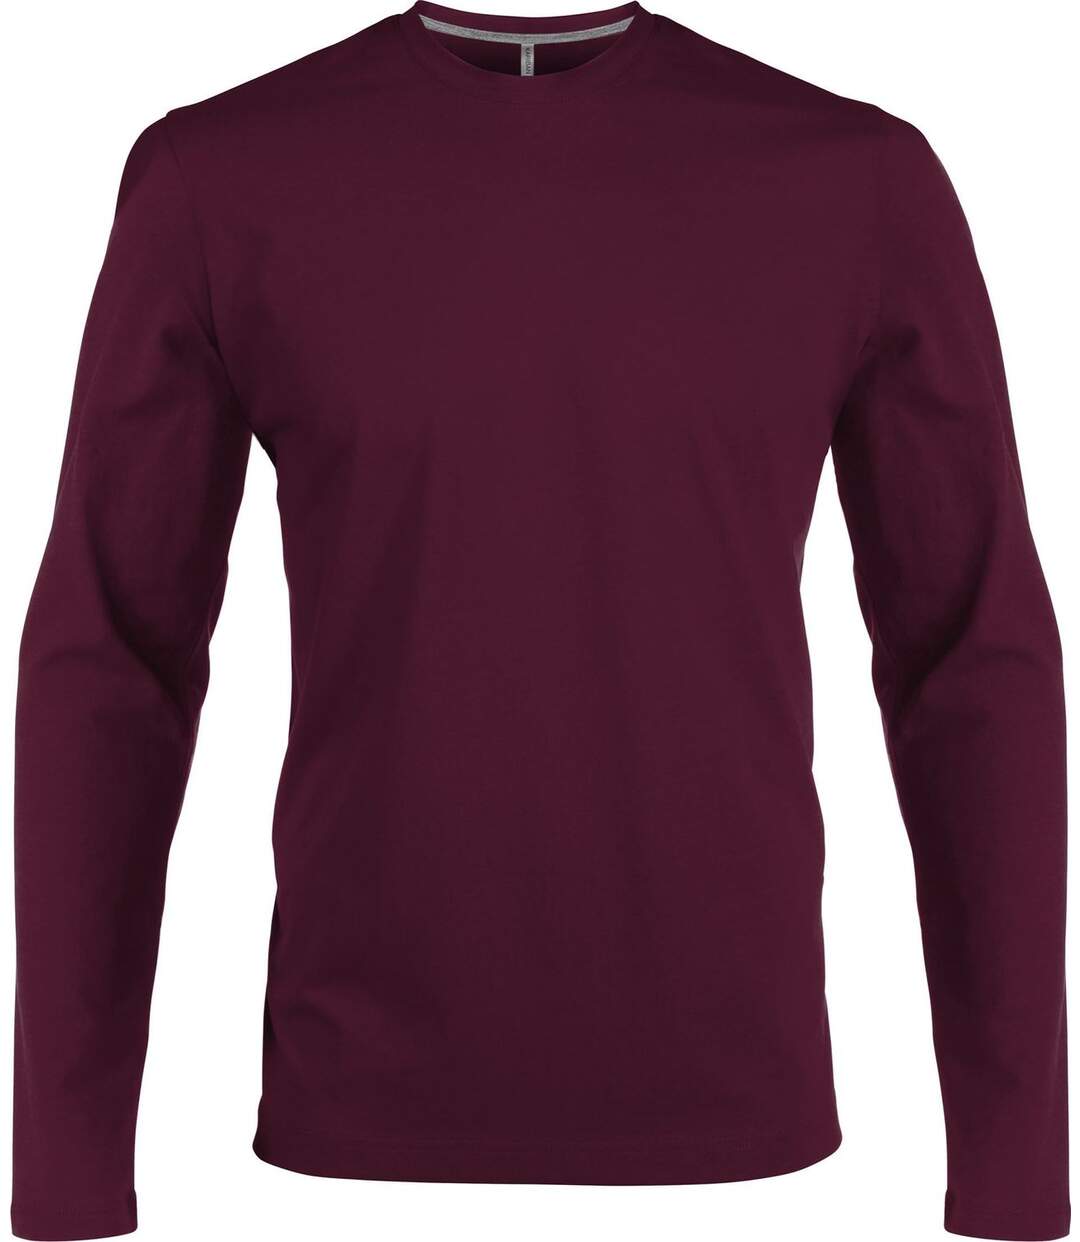 T-shirt manches longues col rond - K359 - rouge vin - homme